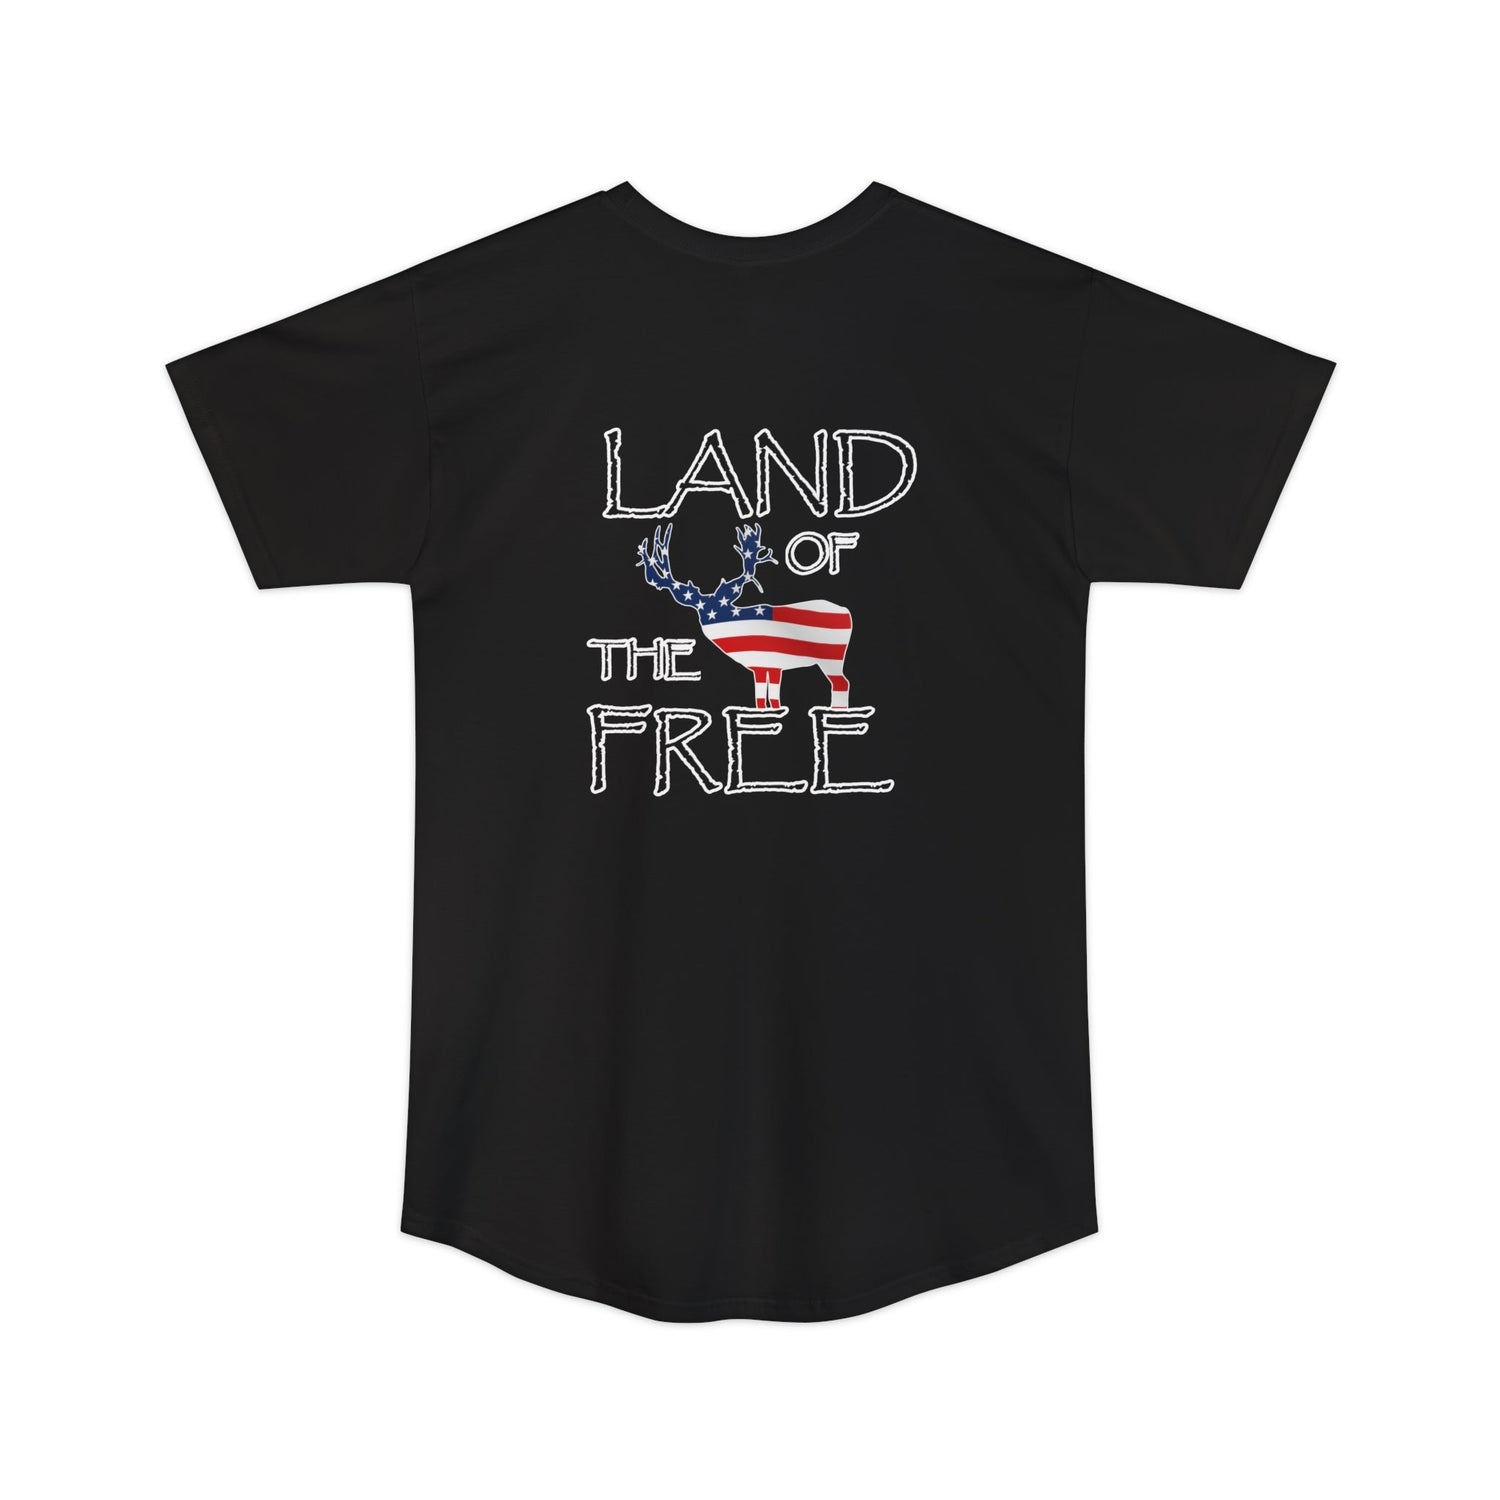 Athletic tall patriotic deer hunting t-shirt, color black, back design placement